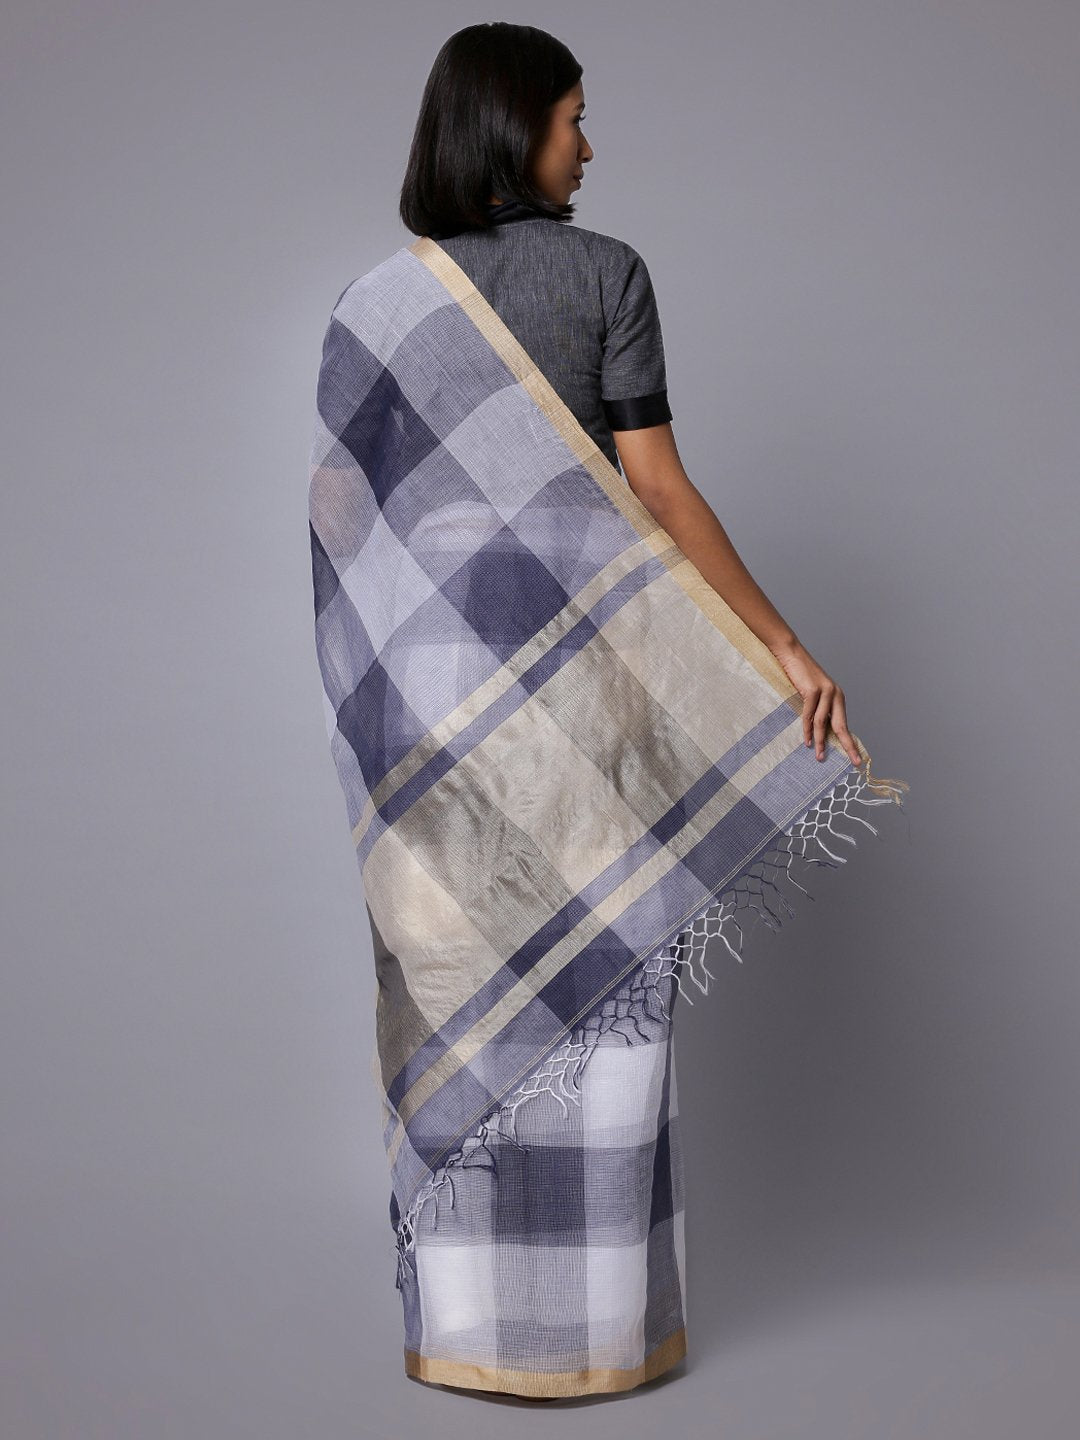 Blue white checks handloom cotton silk saree